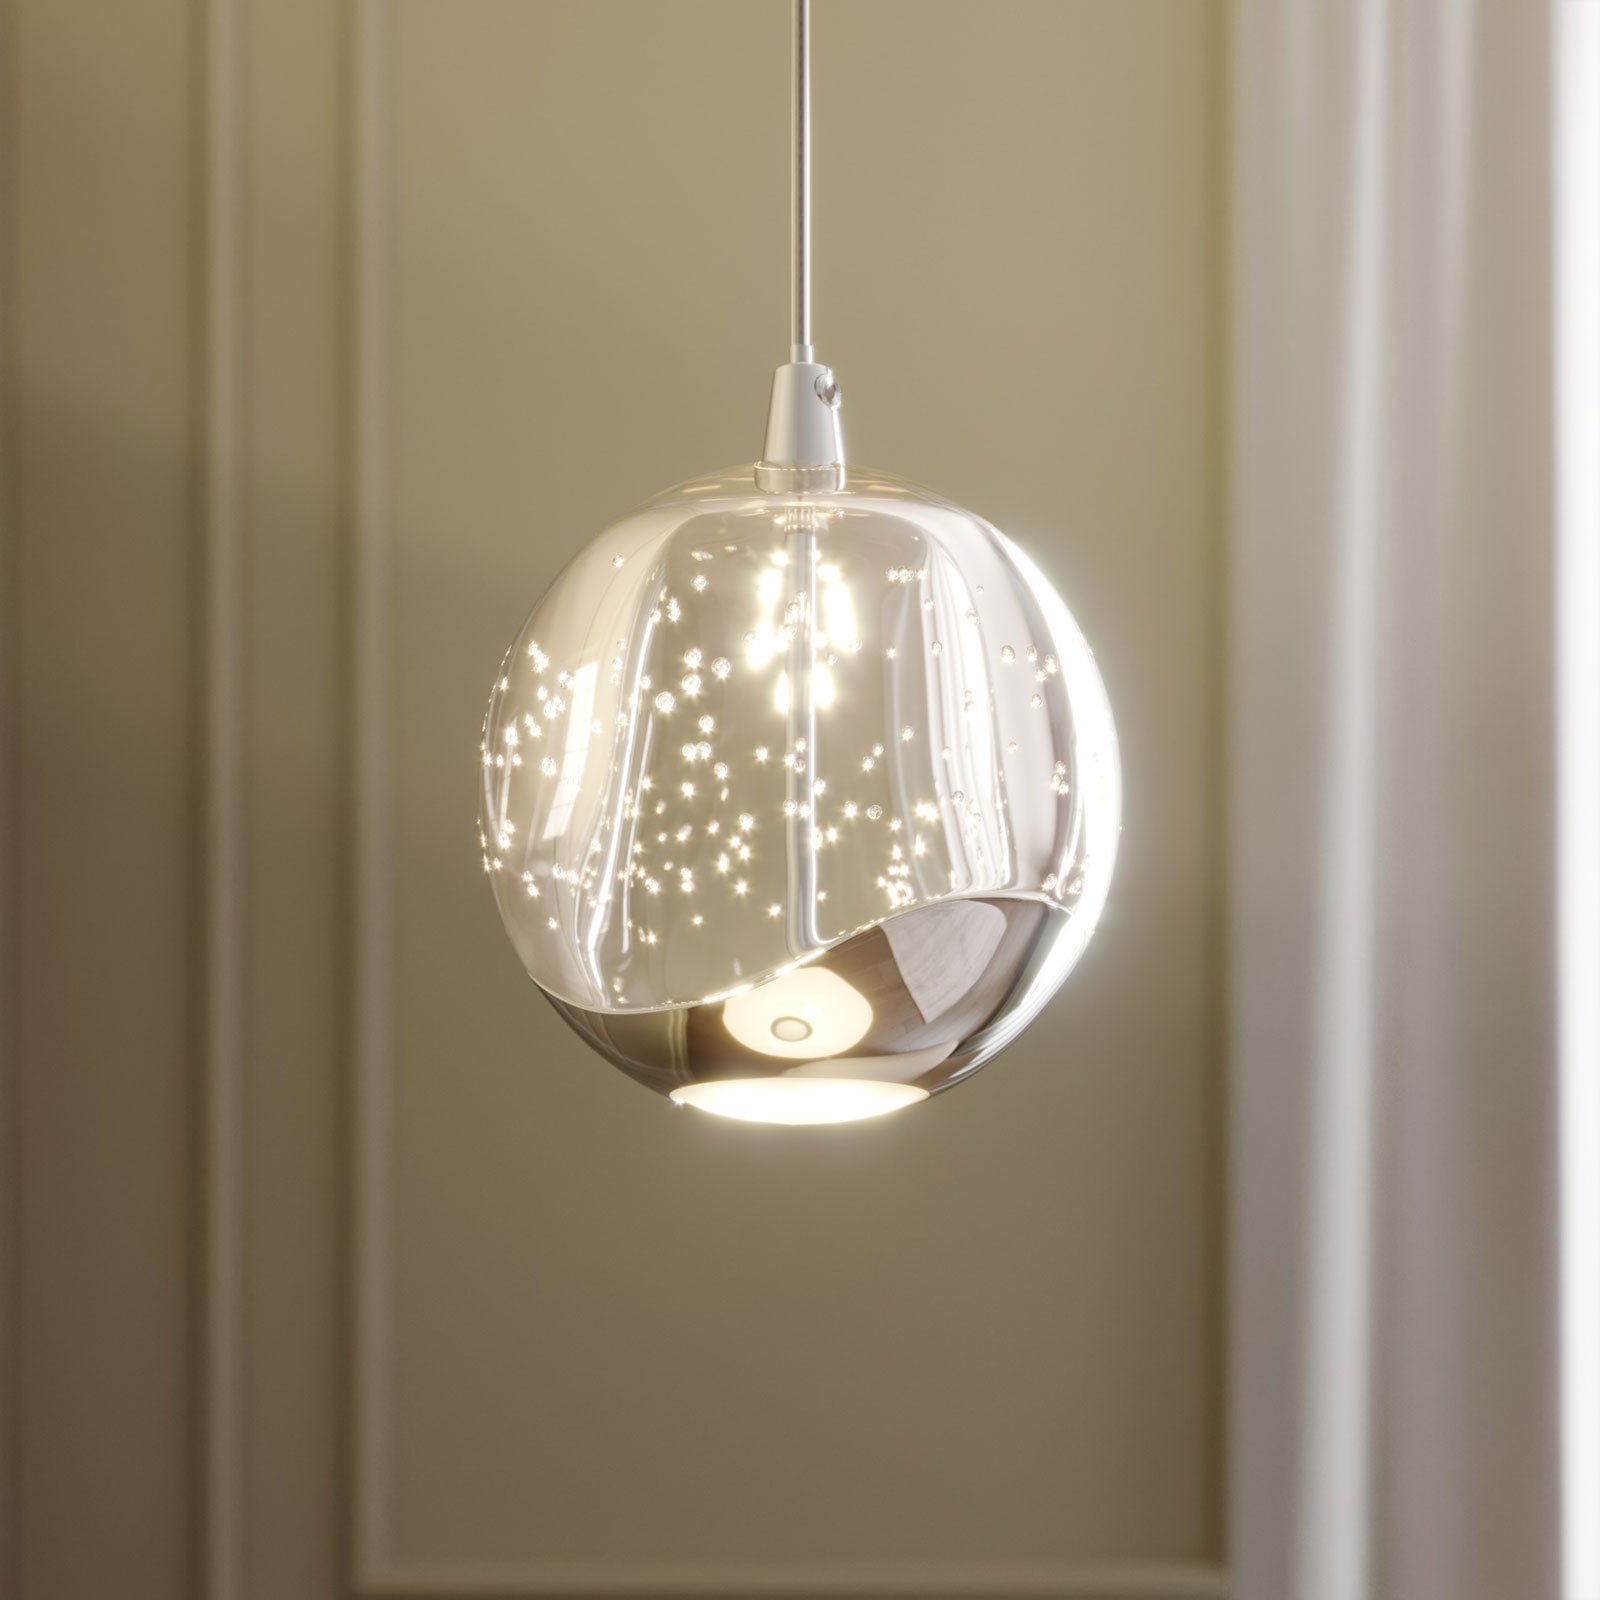 LED hanglamp Hayley met glasbol, 1 lampje, chroom